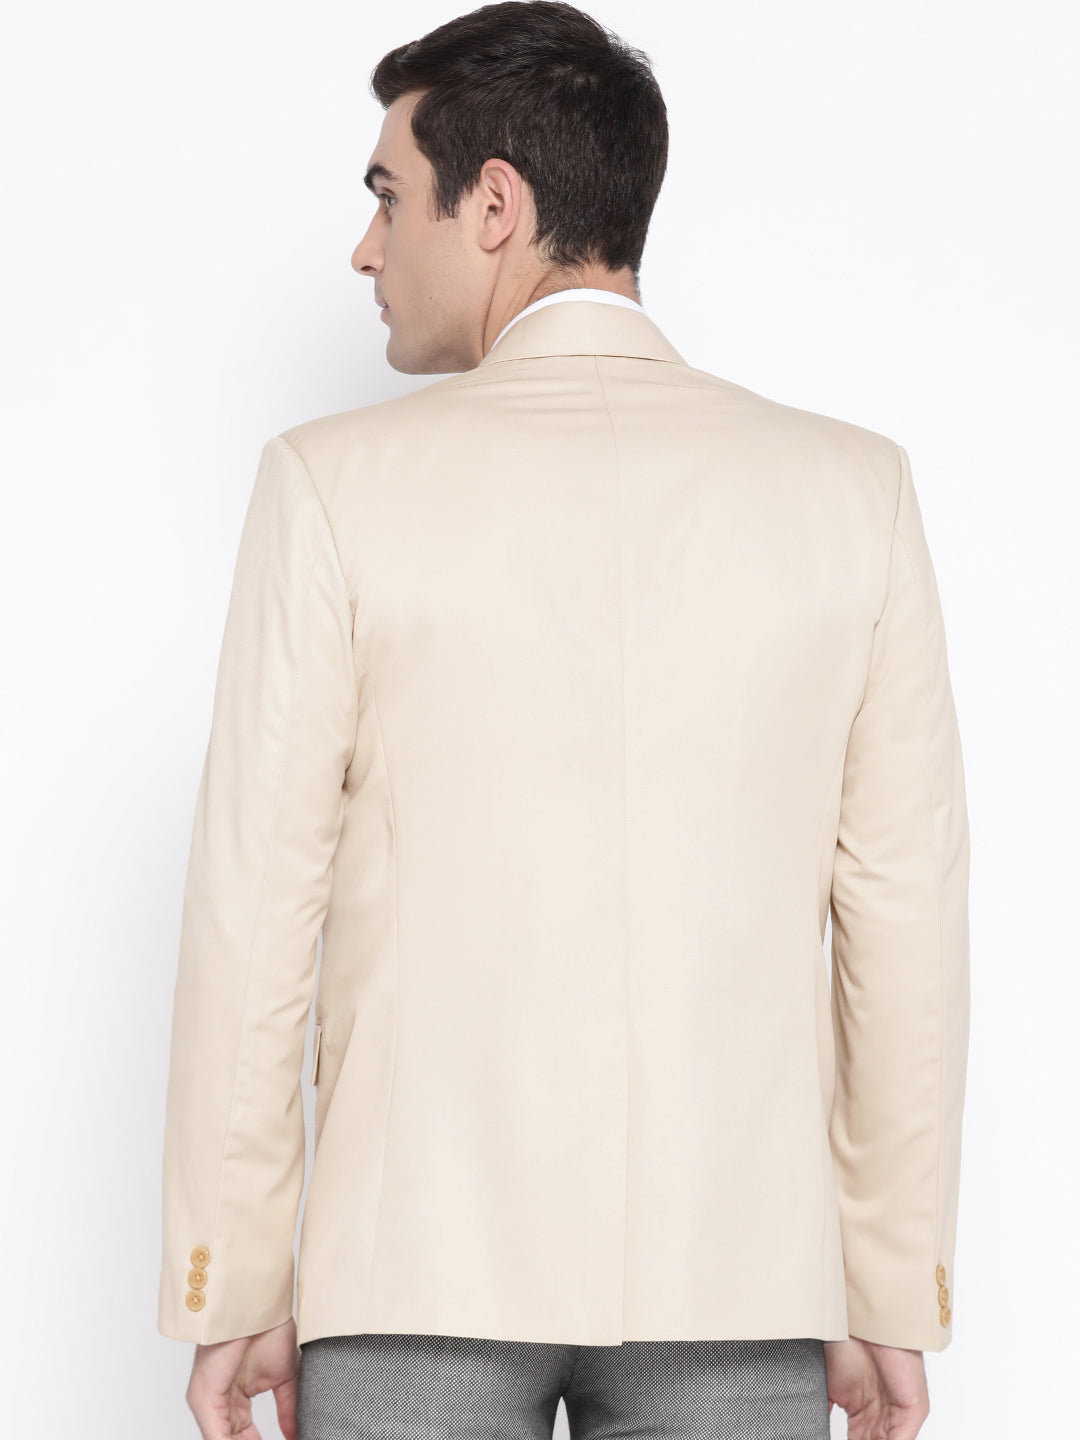 Luxrio Plain Blazer for Men Polyester & Cotton Casual Party Wear Slim Fit Jacket